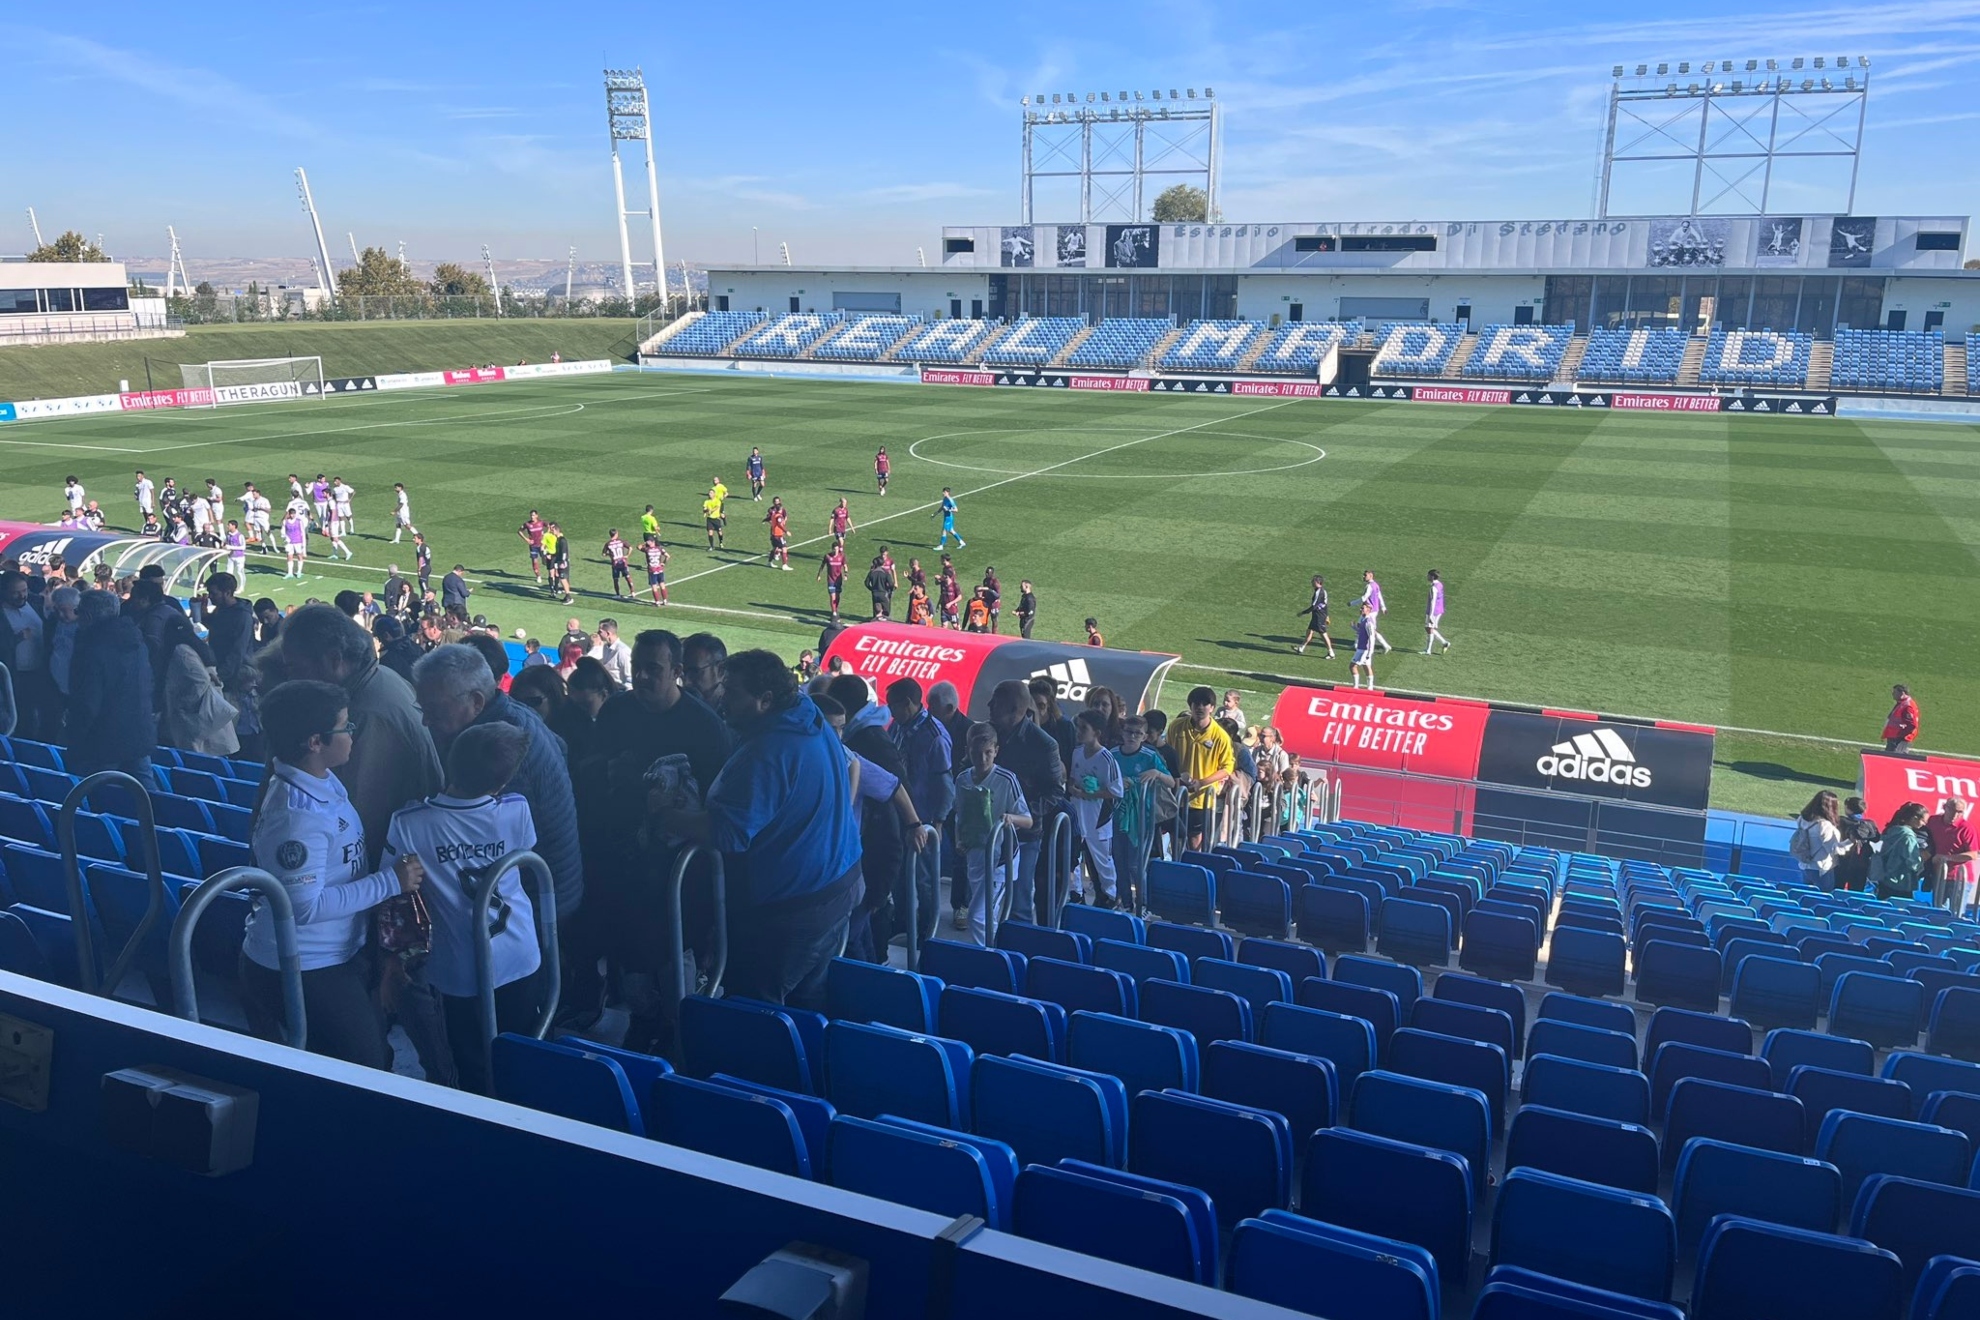 Desalojan el Alfredo Di Stéfano durante el Real Madrid Castilla - Pontevedra